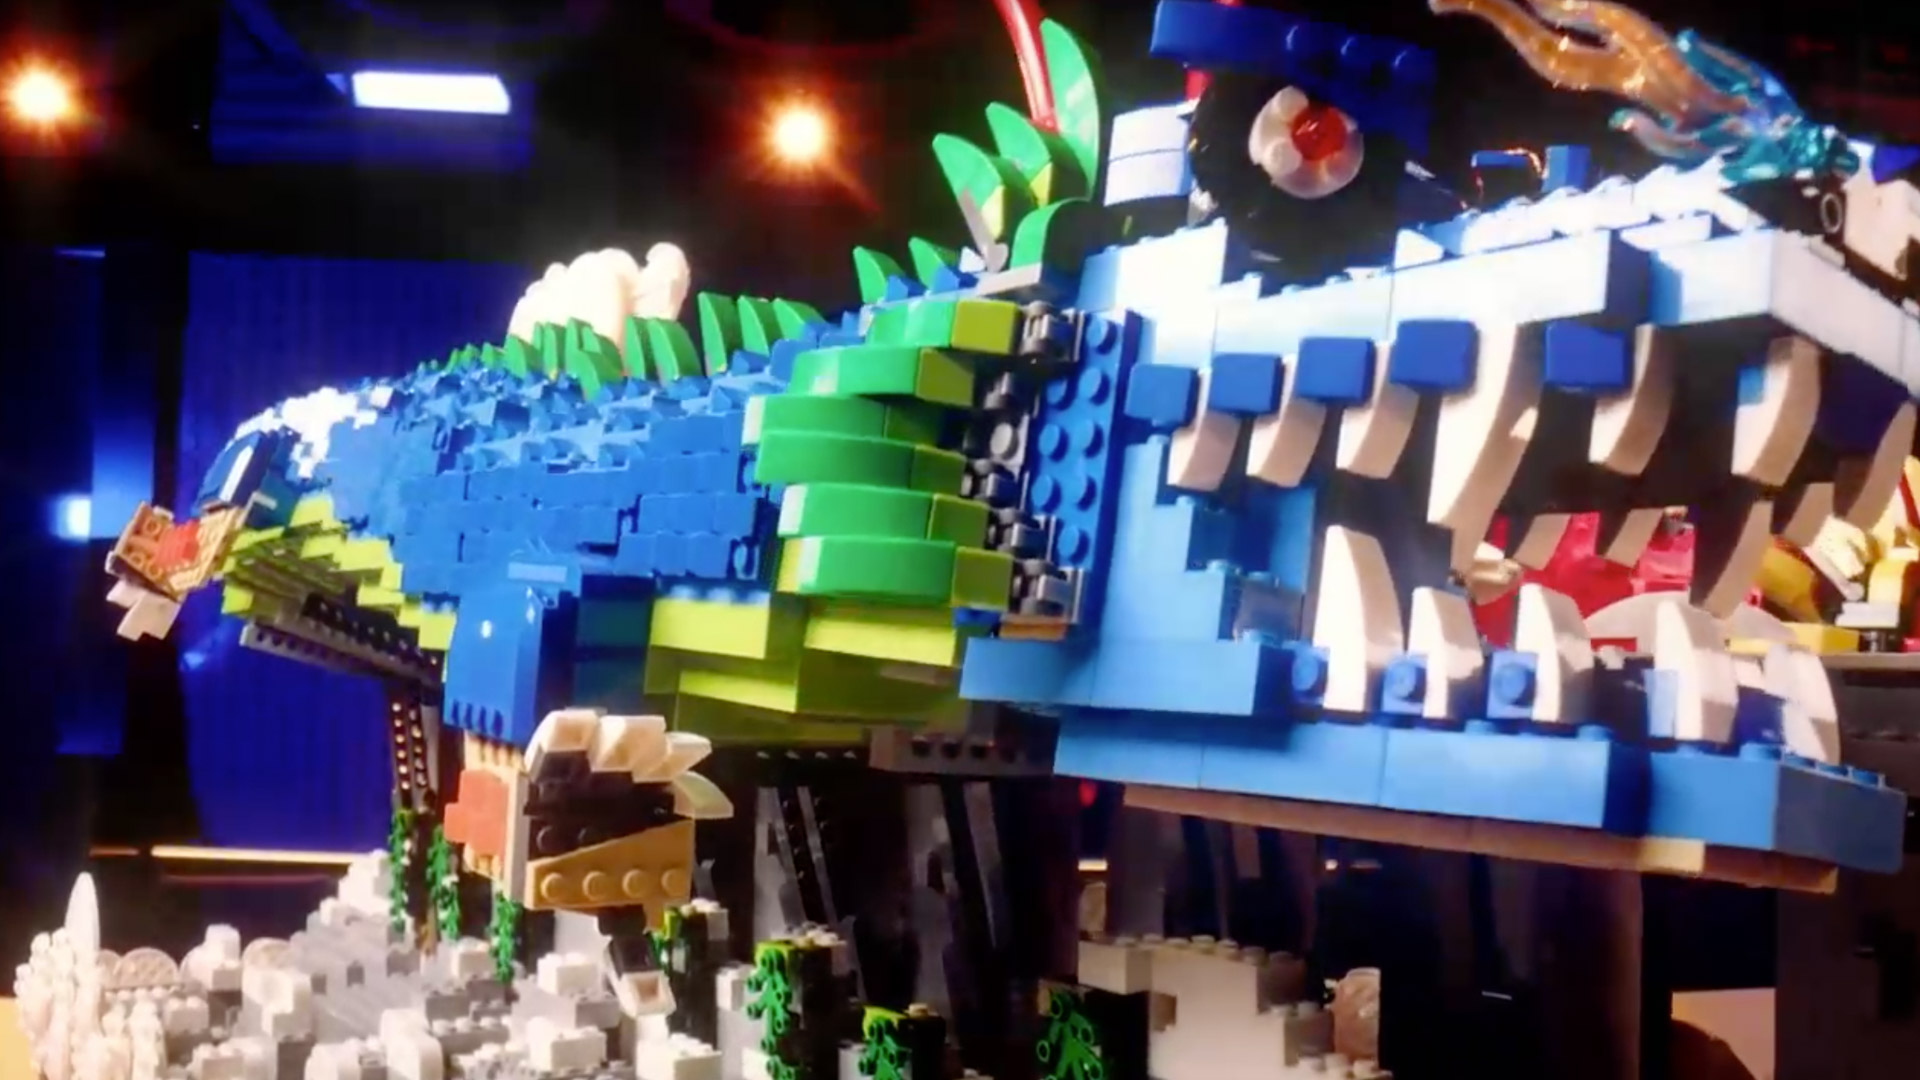 LEGO Masters U.S Season 2 – LEGO Parade Day - Zack and Wayne - Soaring Dragon